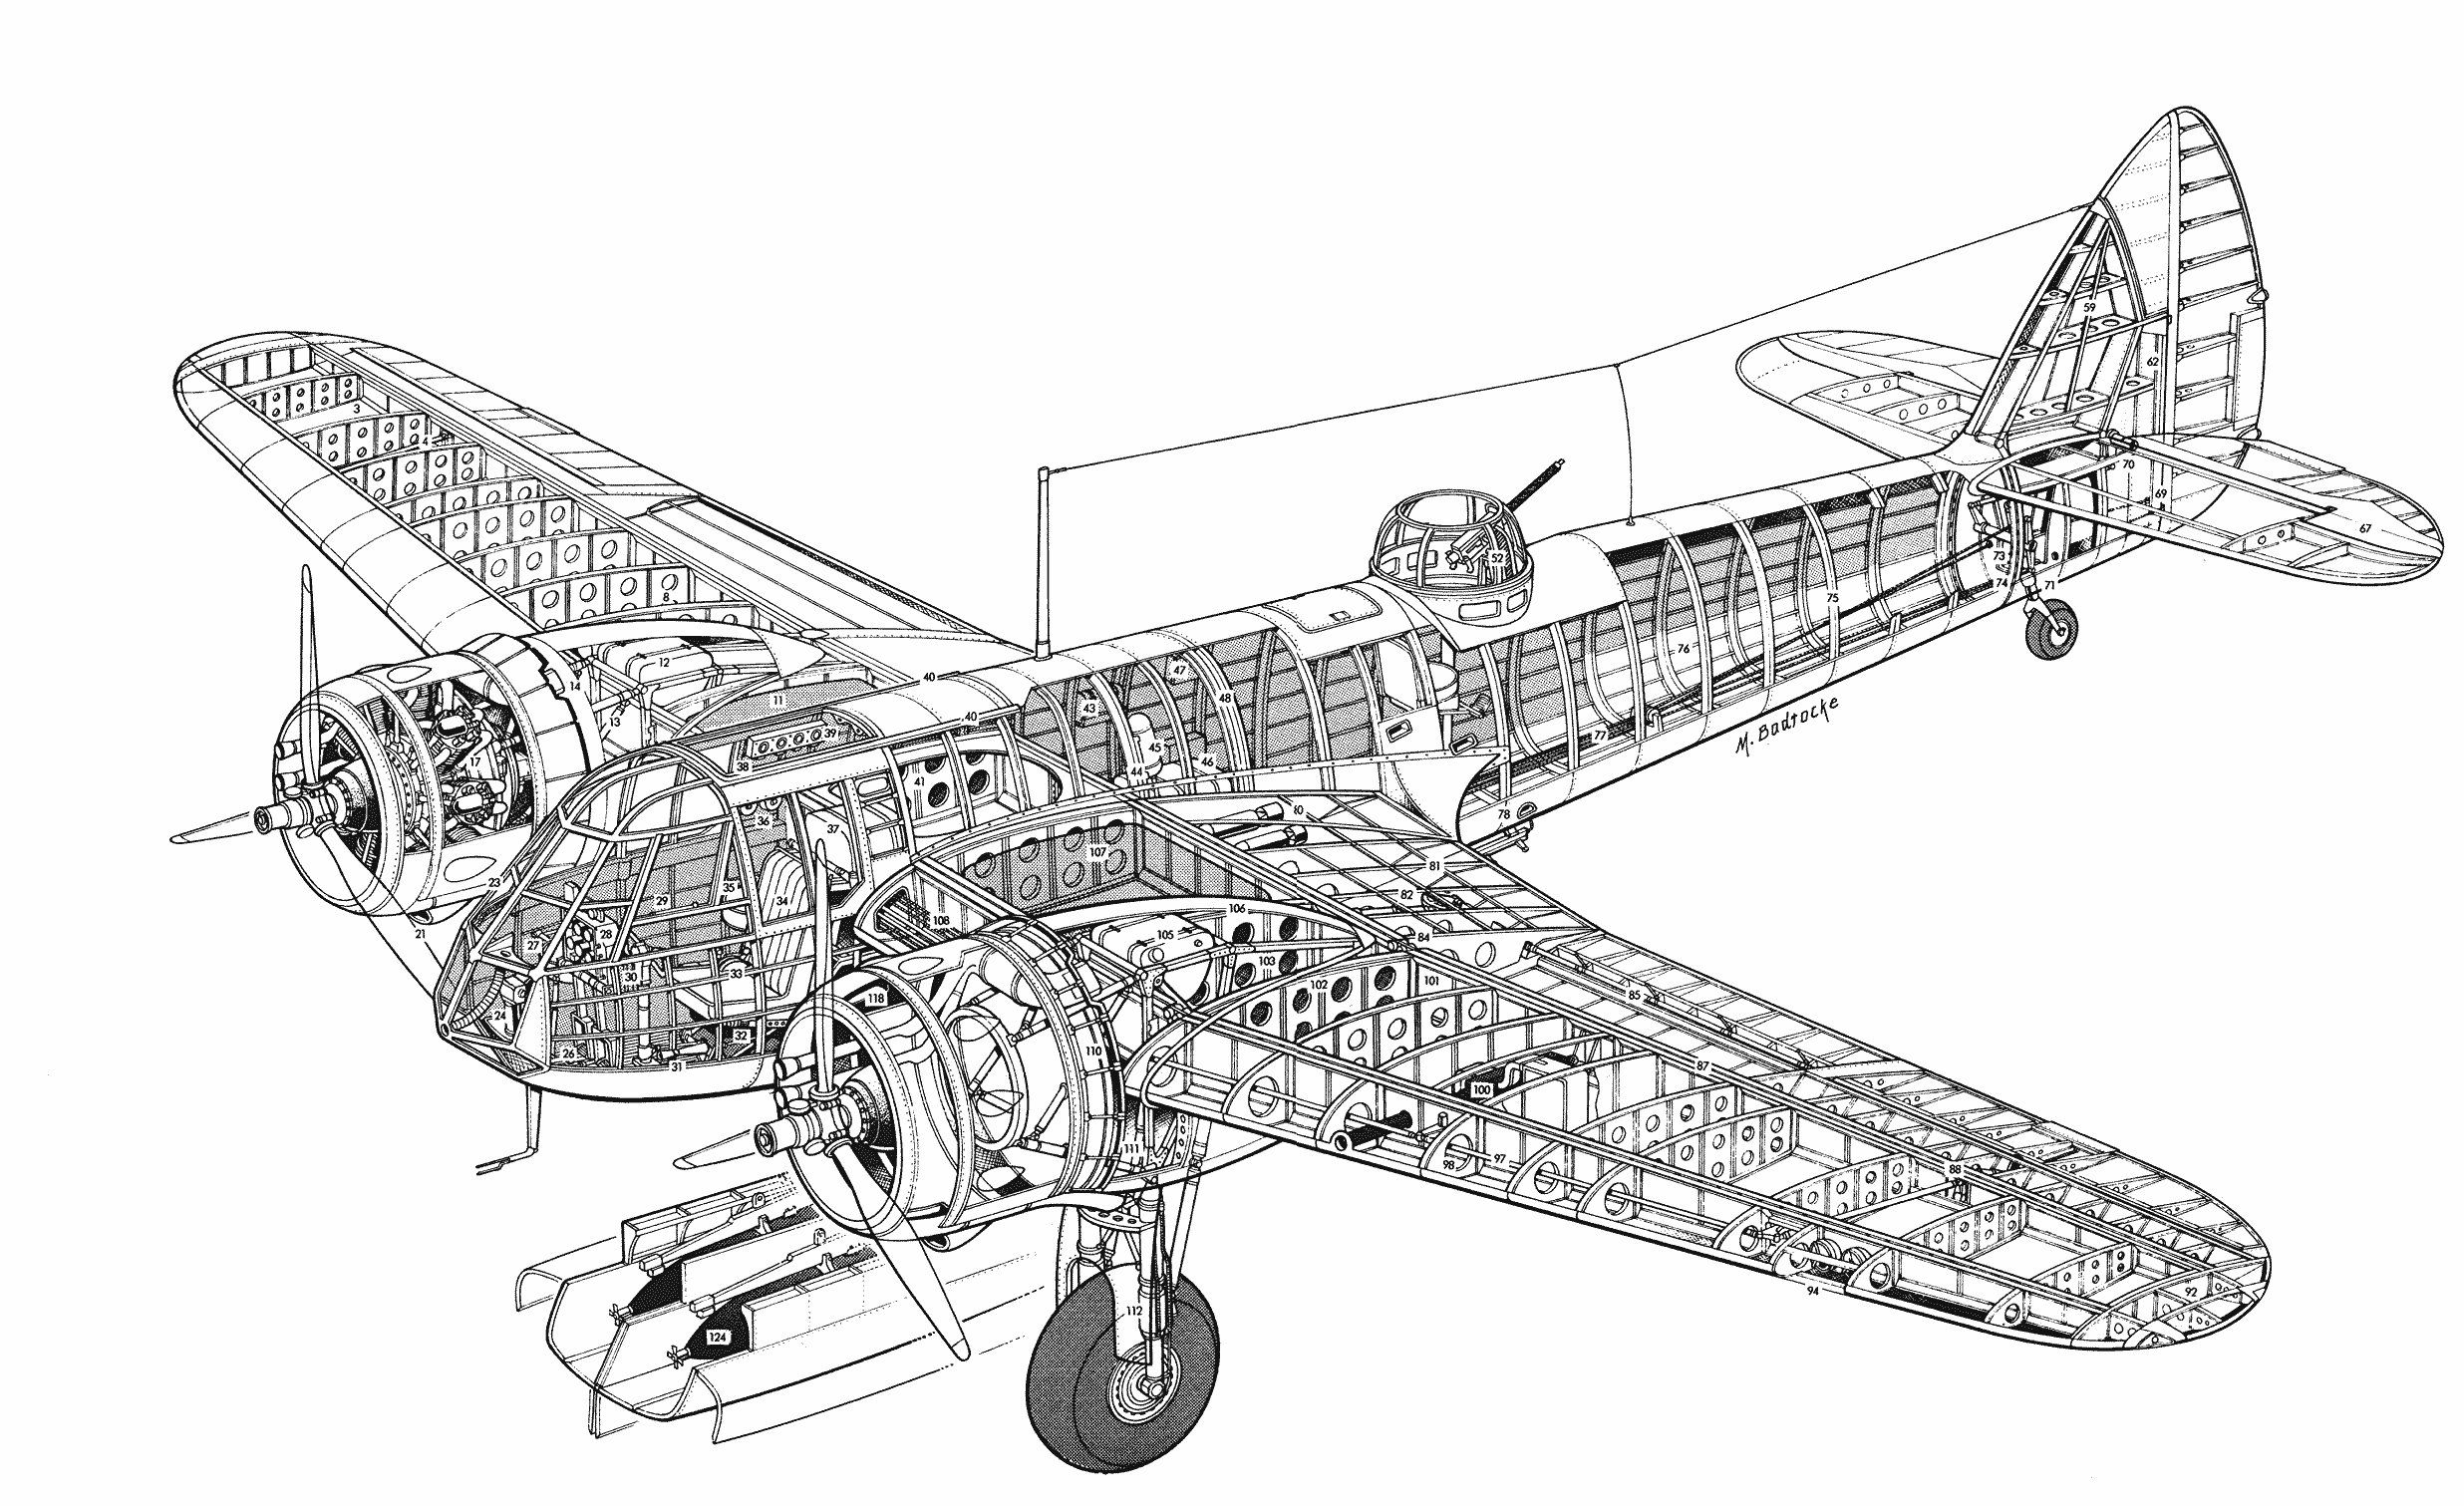 Bristol Blenheim cutaway